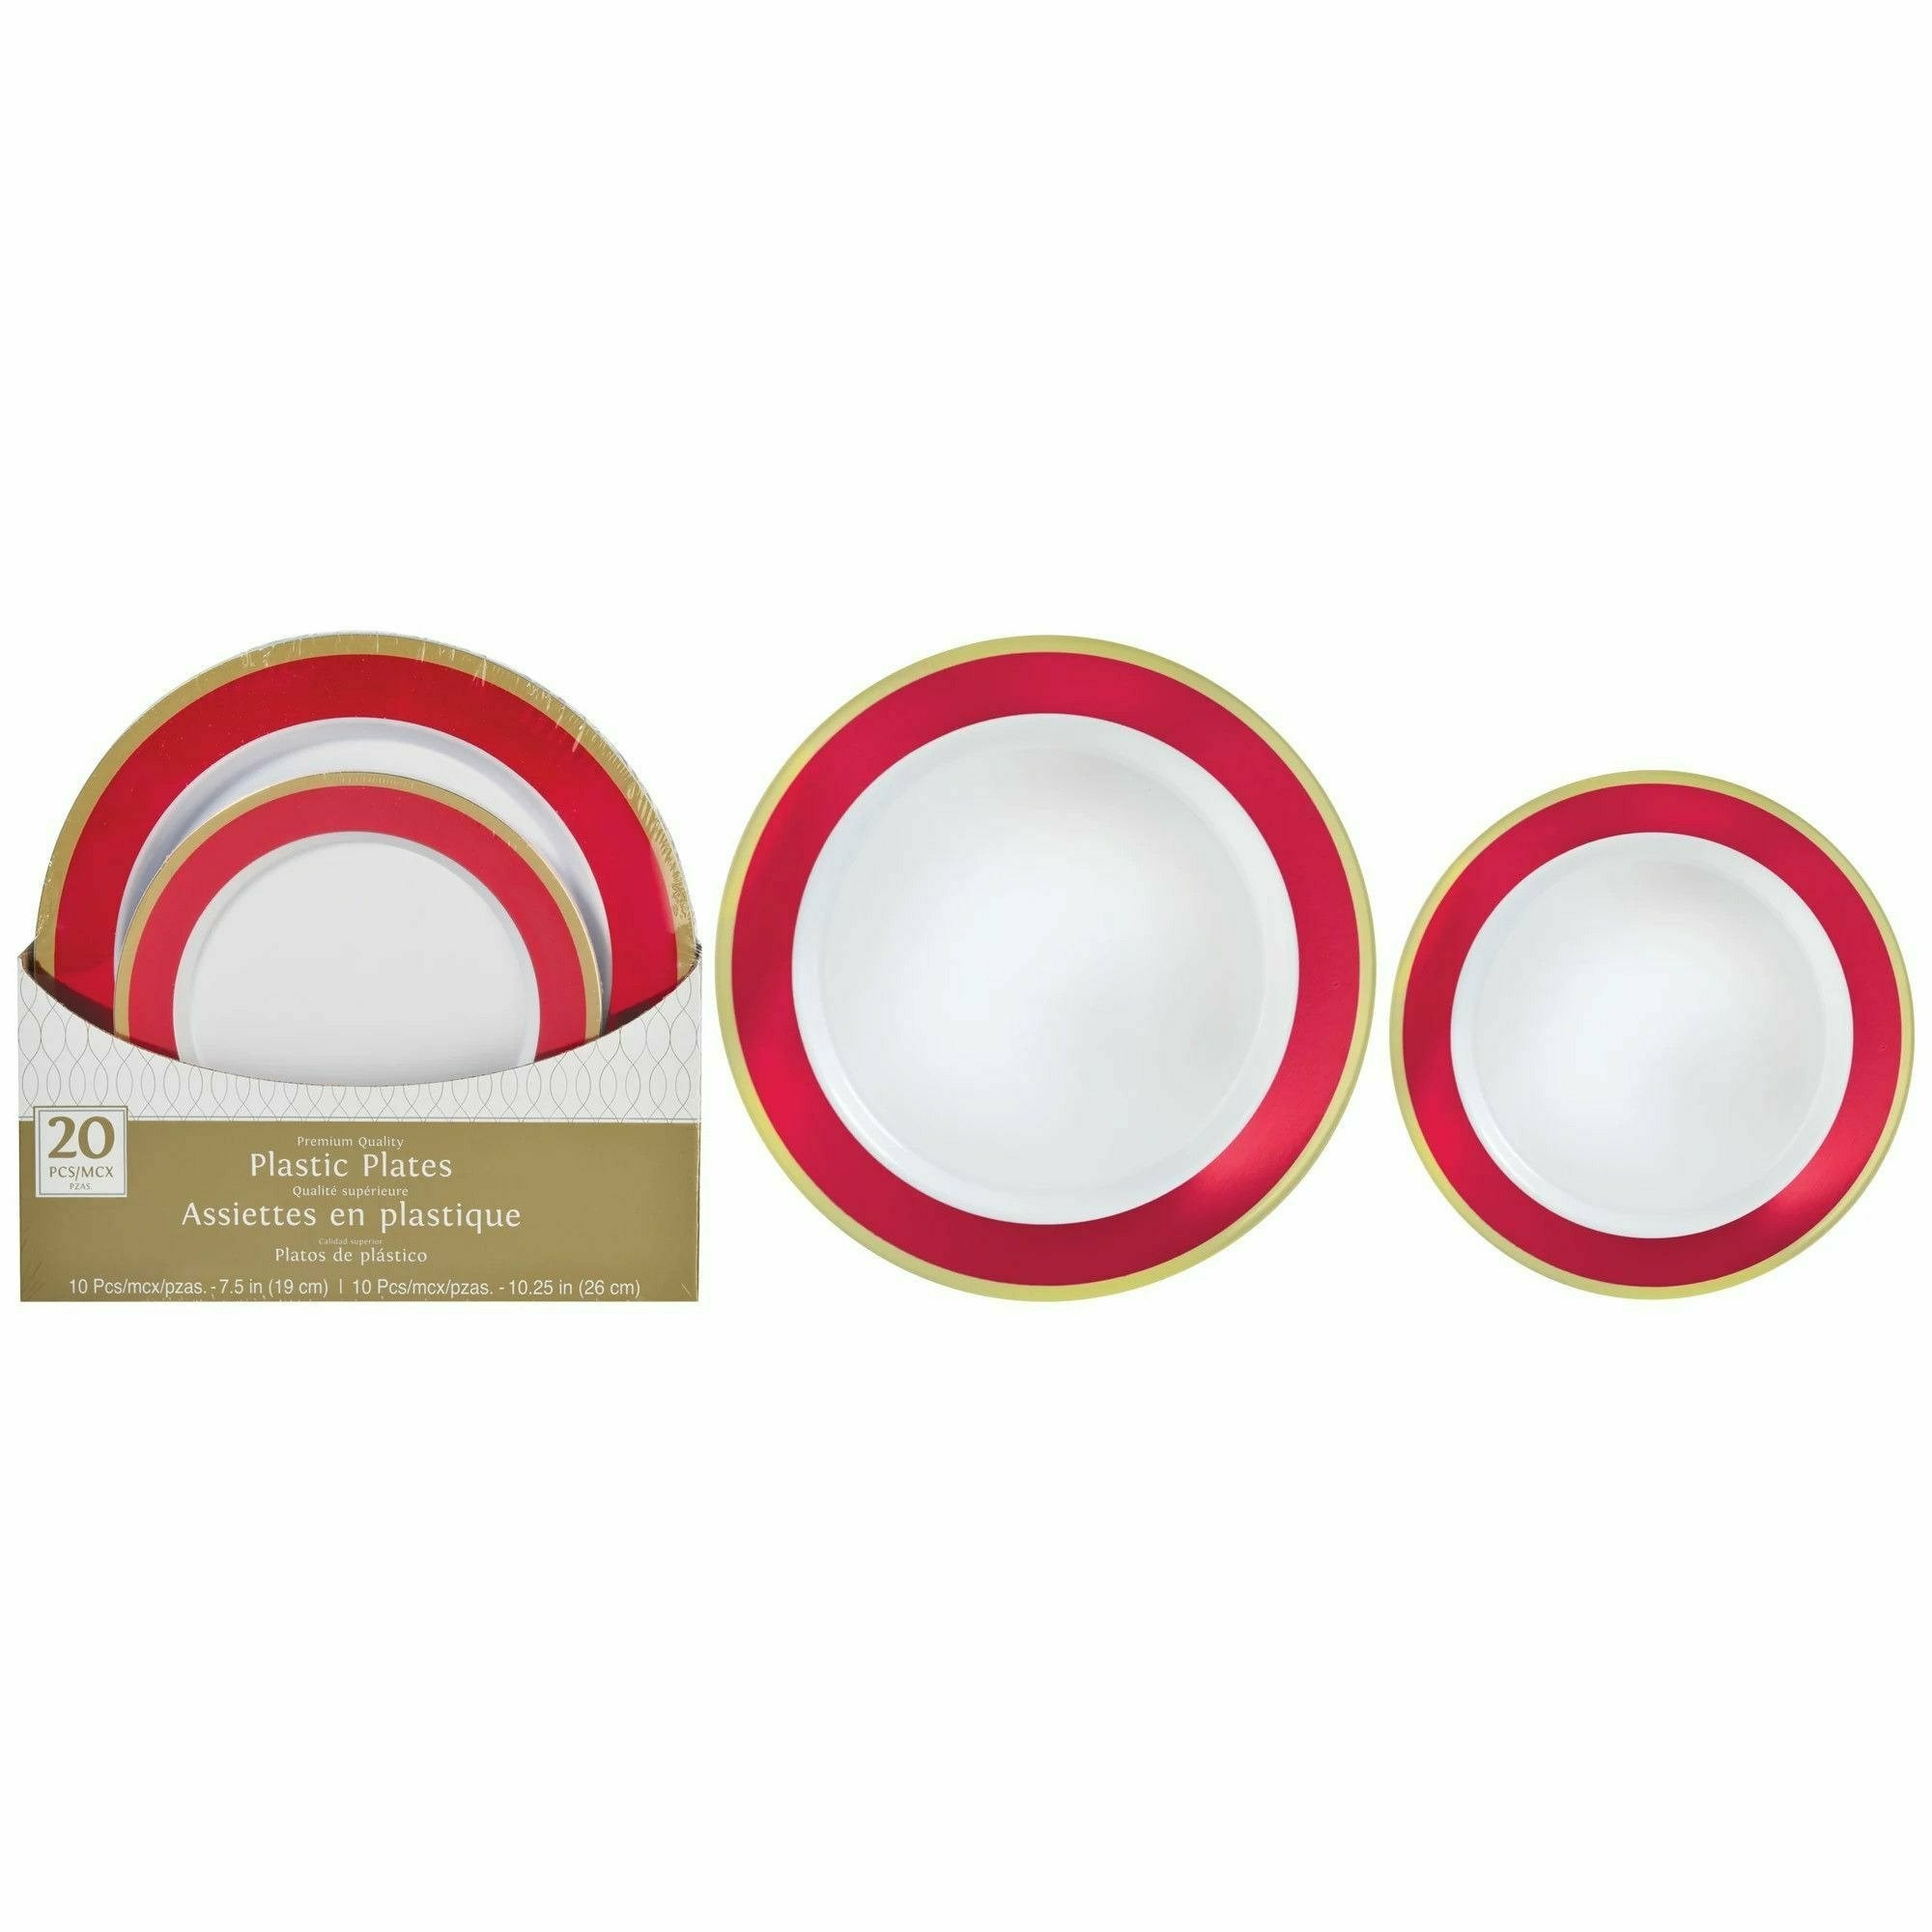 Amscan BASIC Apple Red - Multipack, Hot Stamped Plastic Border Plates